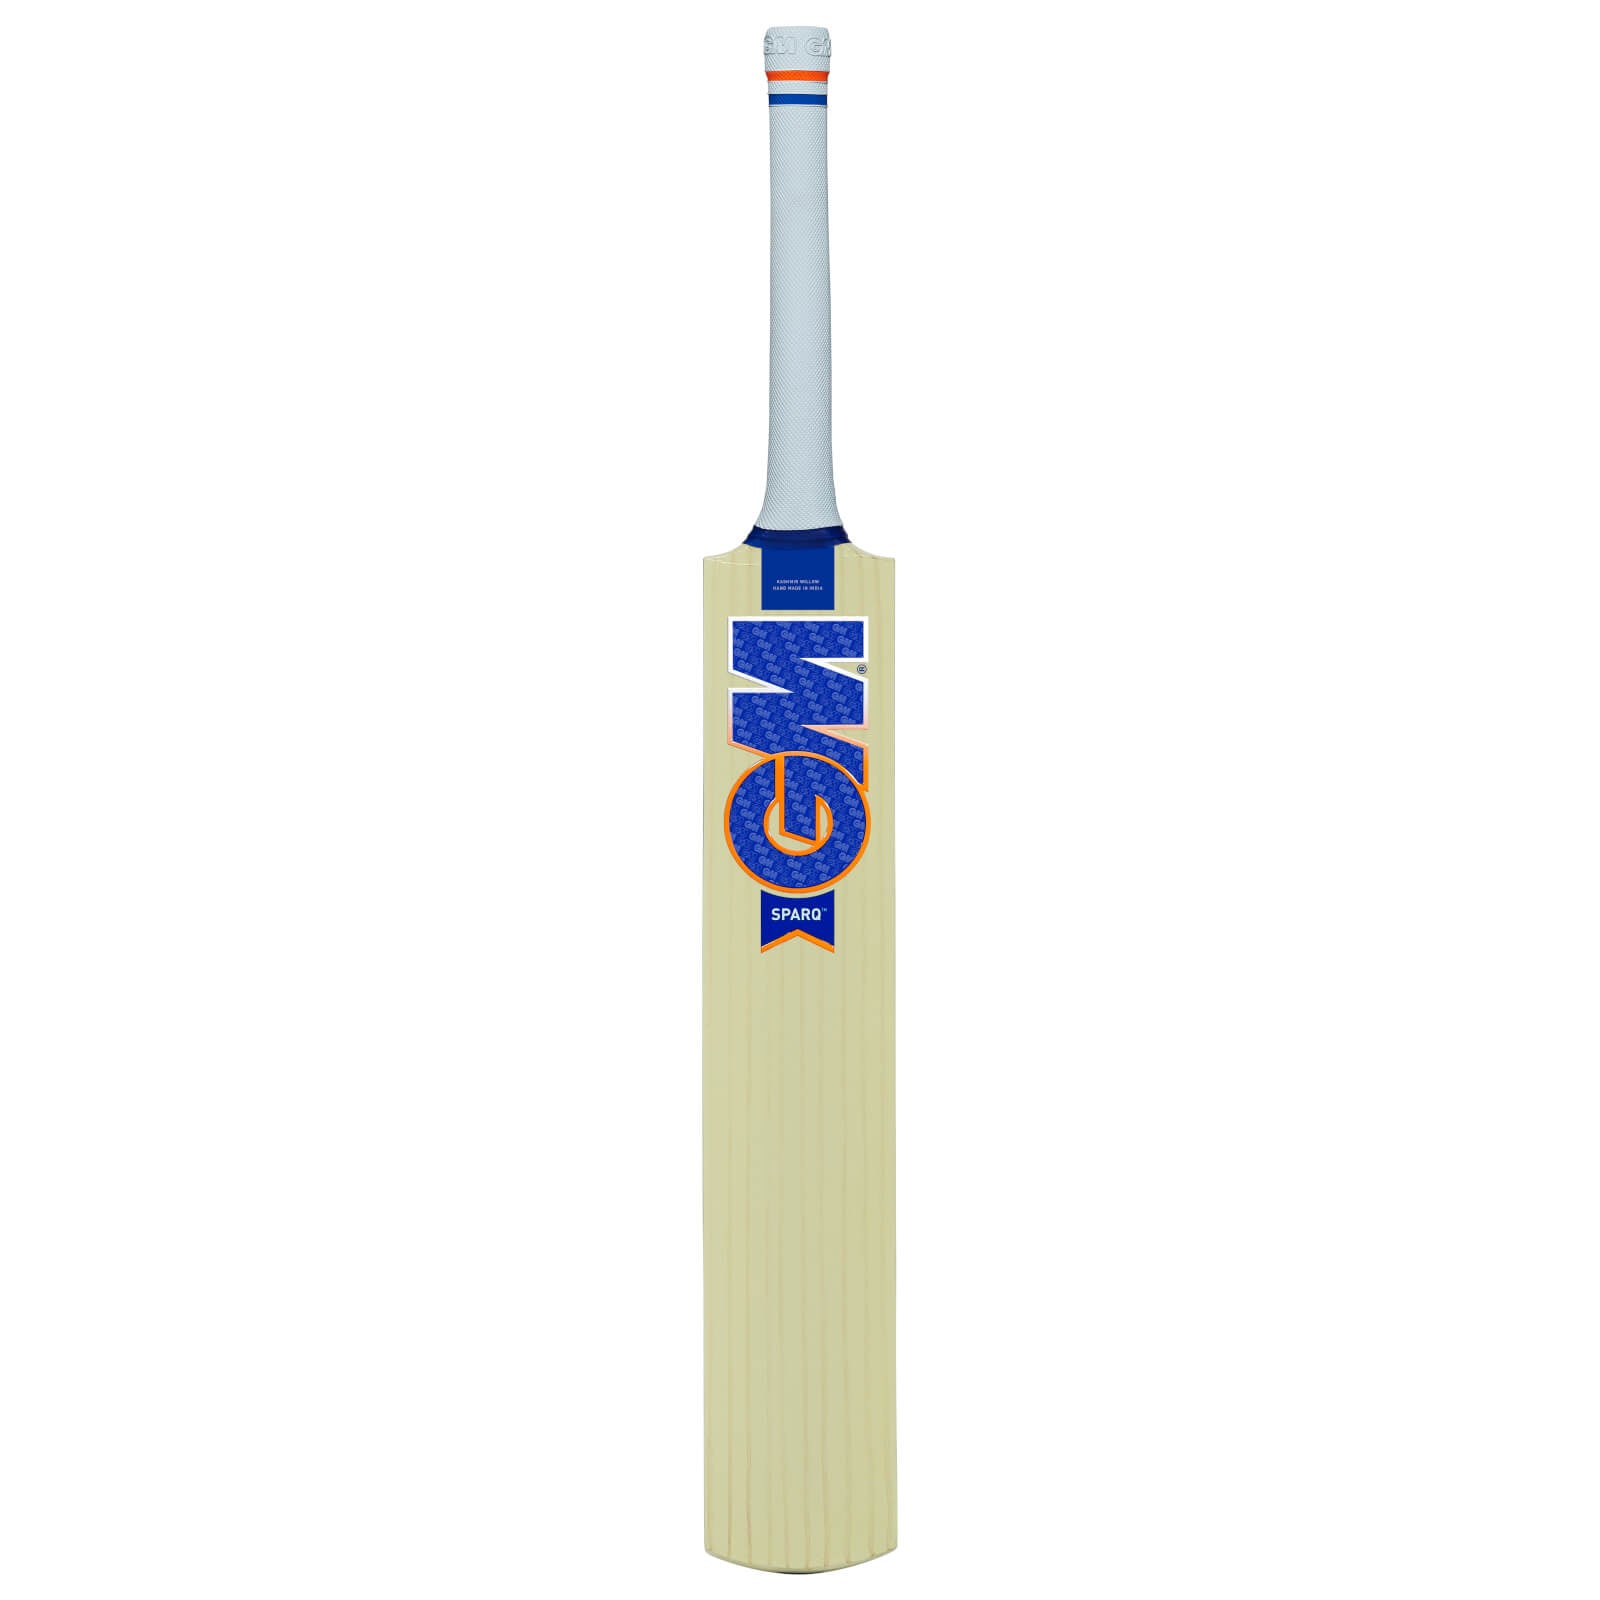 Cricket Bat Gunn & Moore Sparq Kashmir Willow Size 6